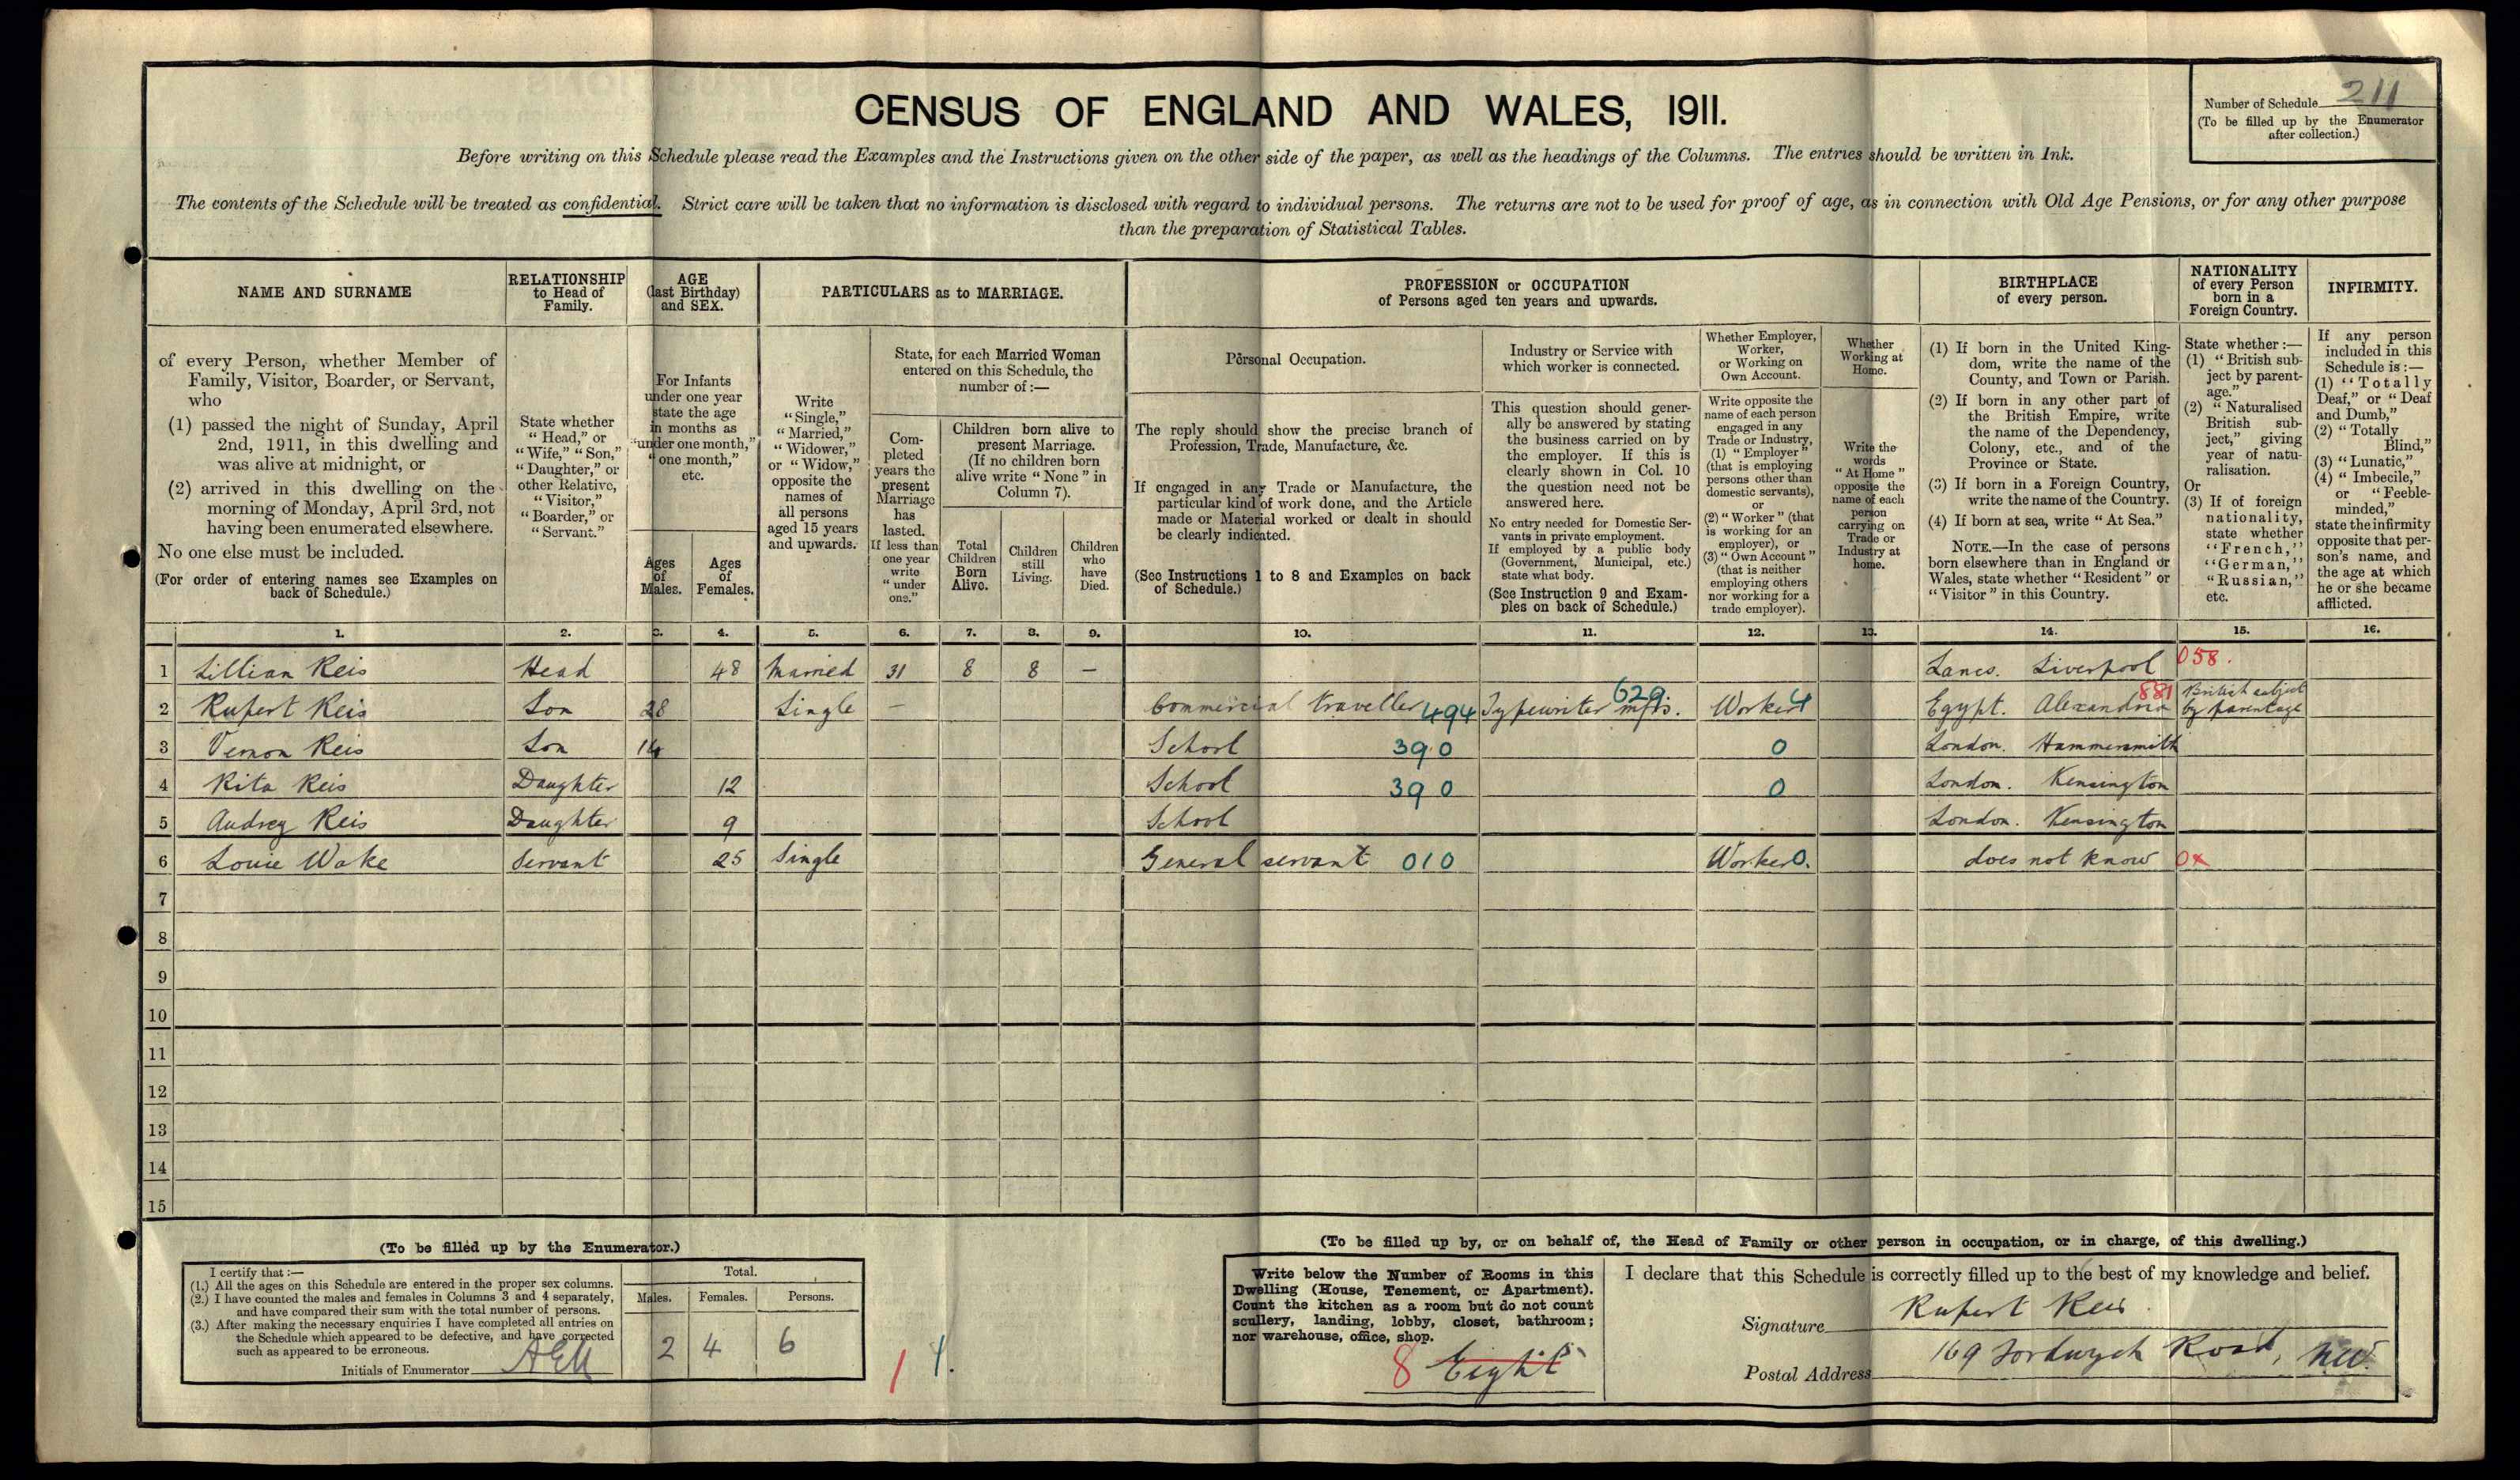 Lillian Reis on 1911 Census